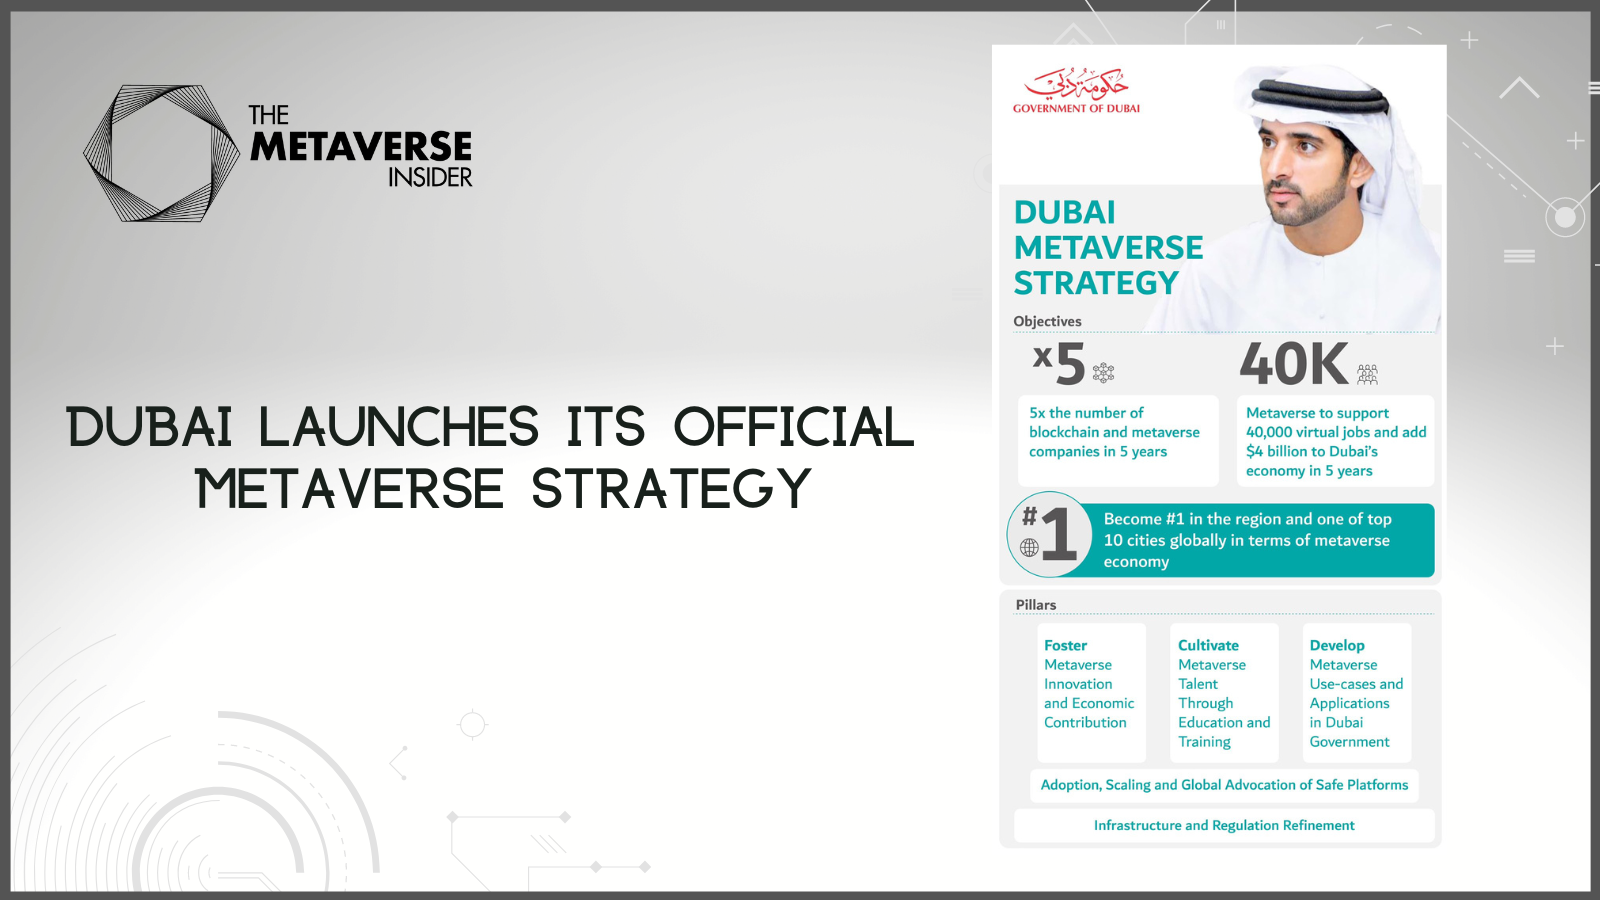 The Dubai Metaverse strategy